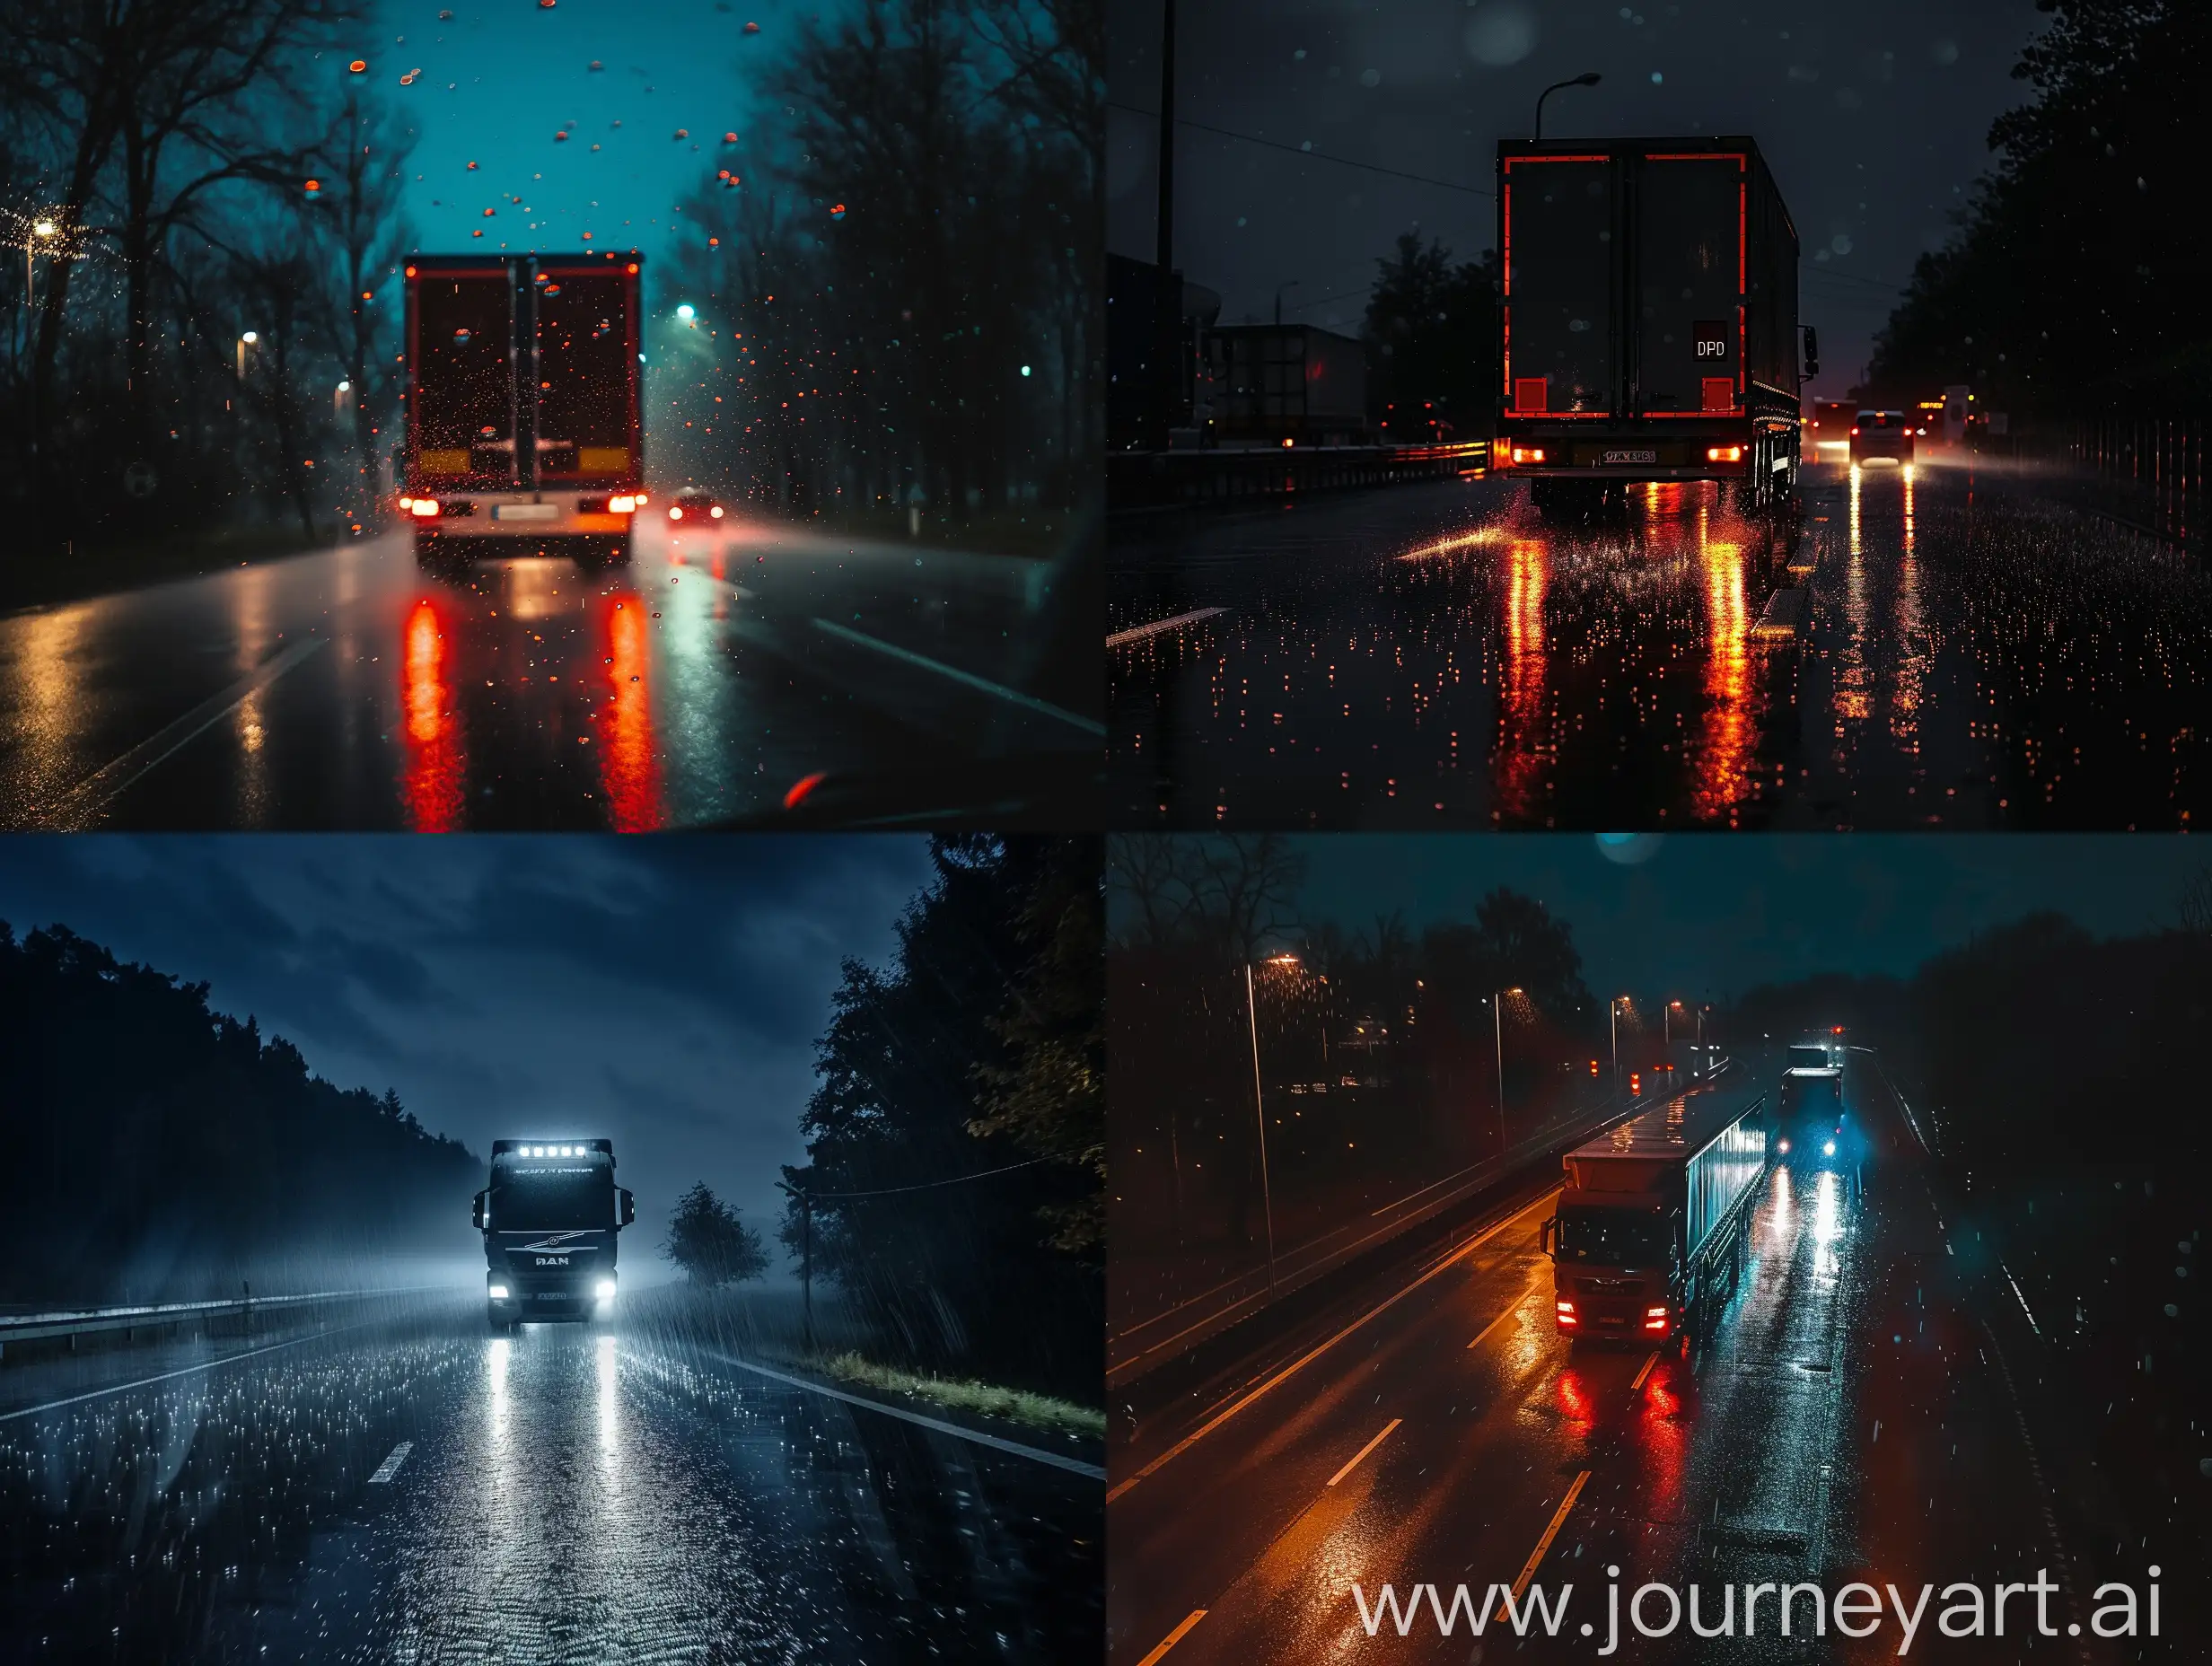 Night, route, dpd transport Europe TIR in motion, car light, dark, rain